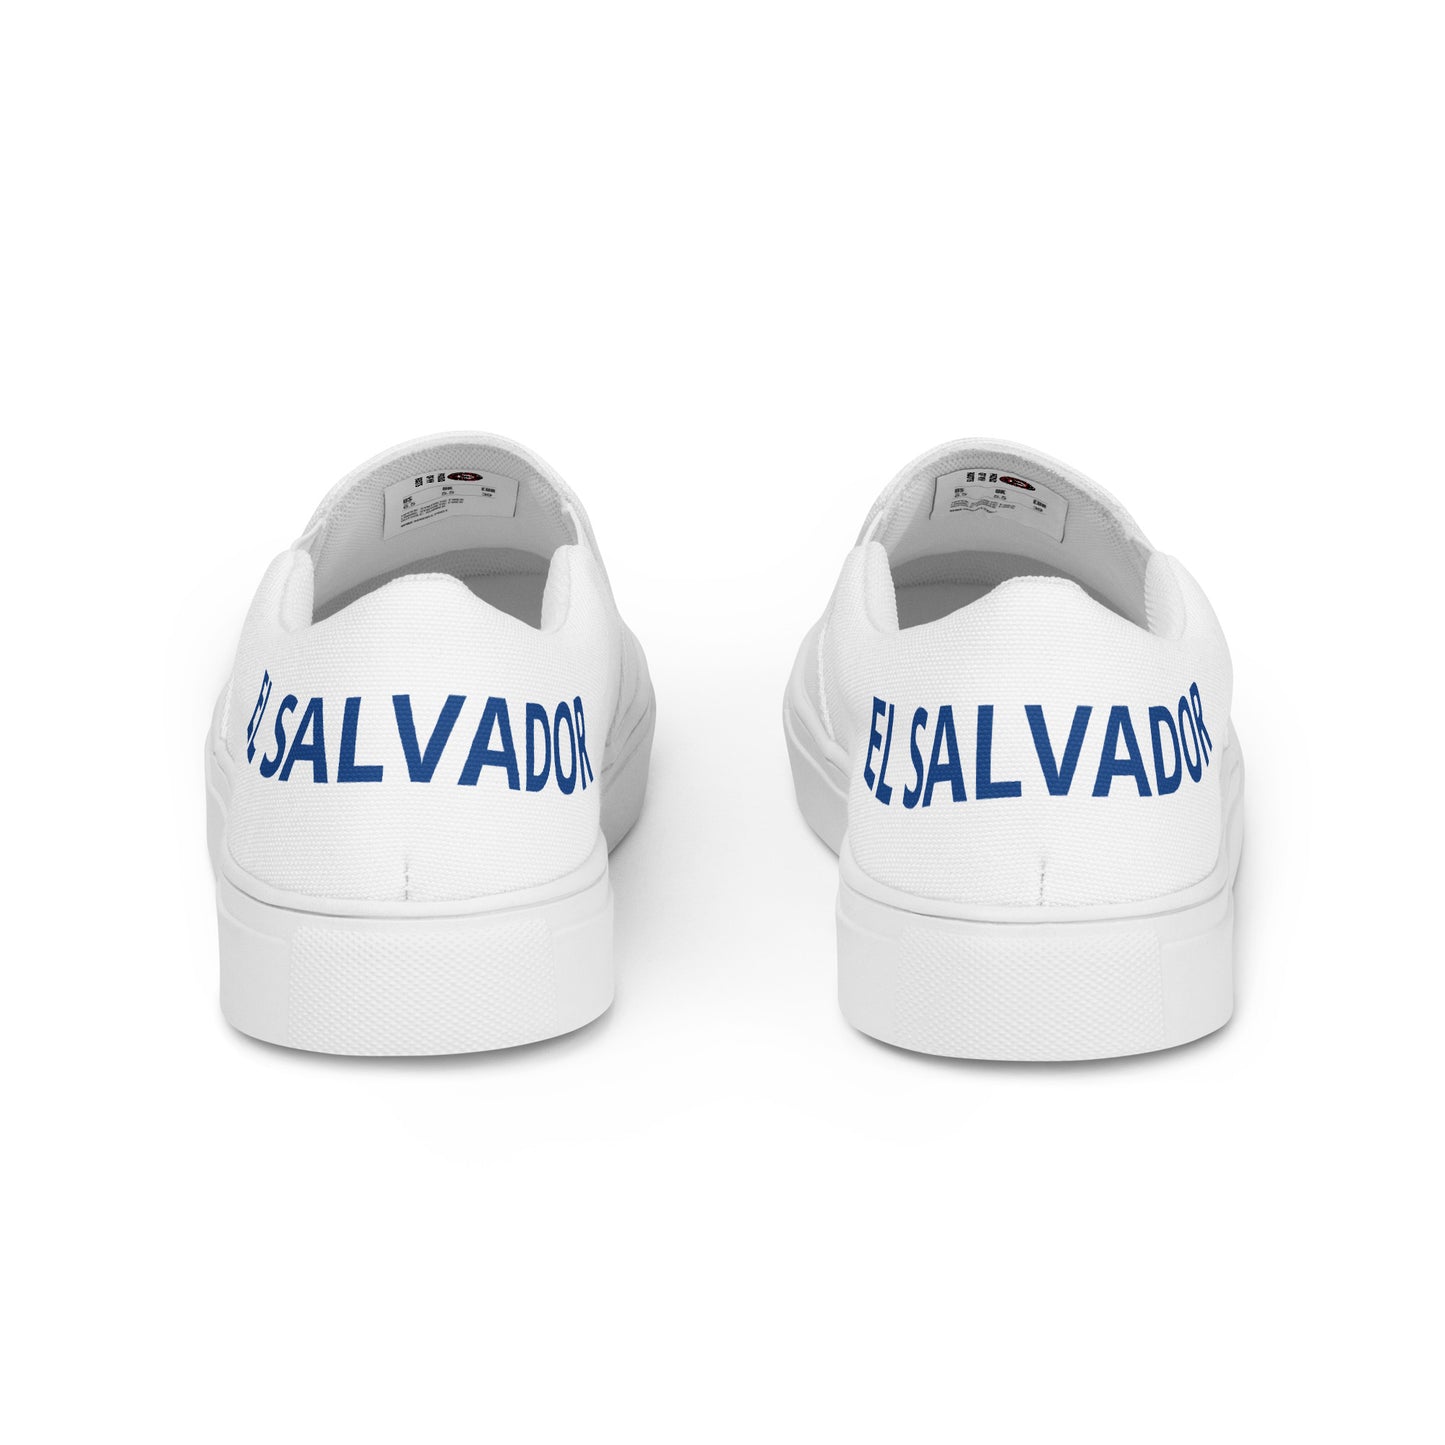 El Salvador - Women - White - Slip-on shoes